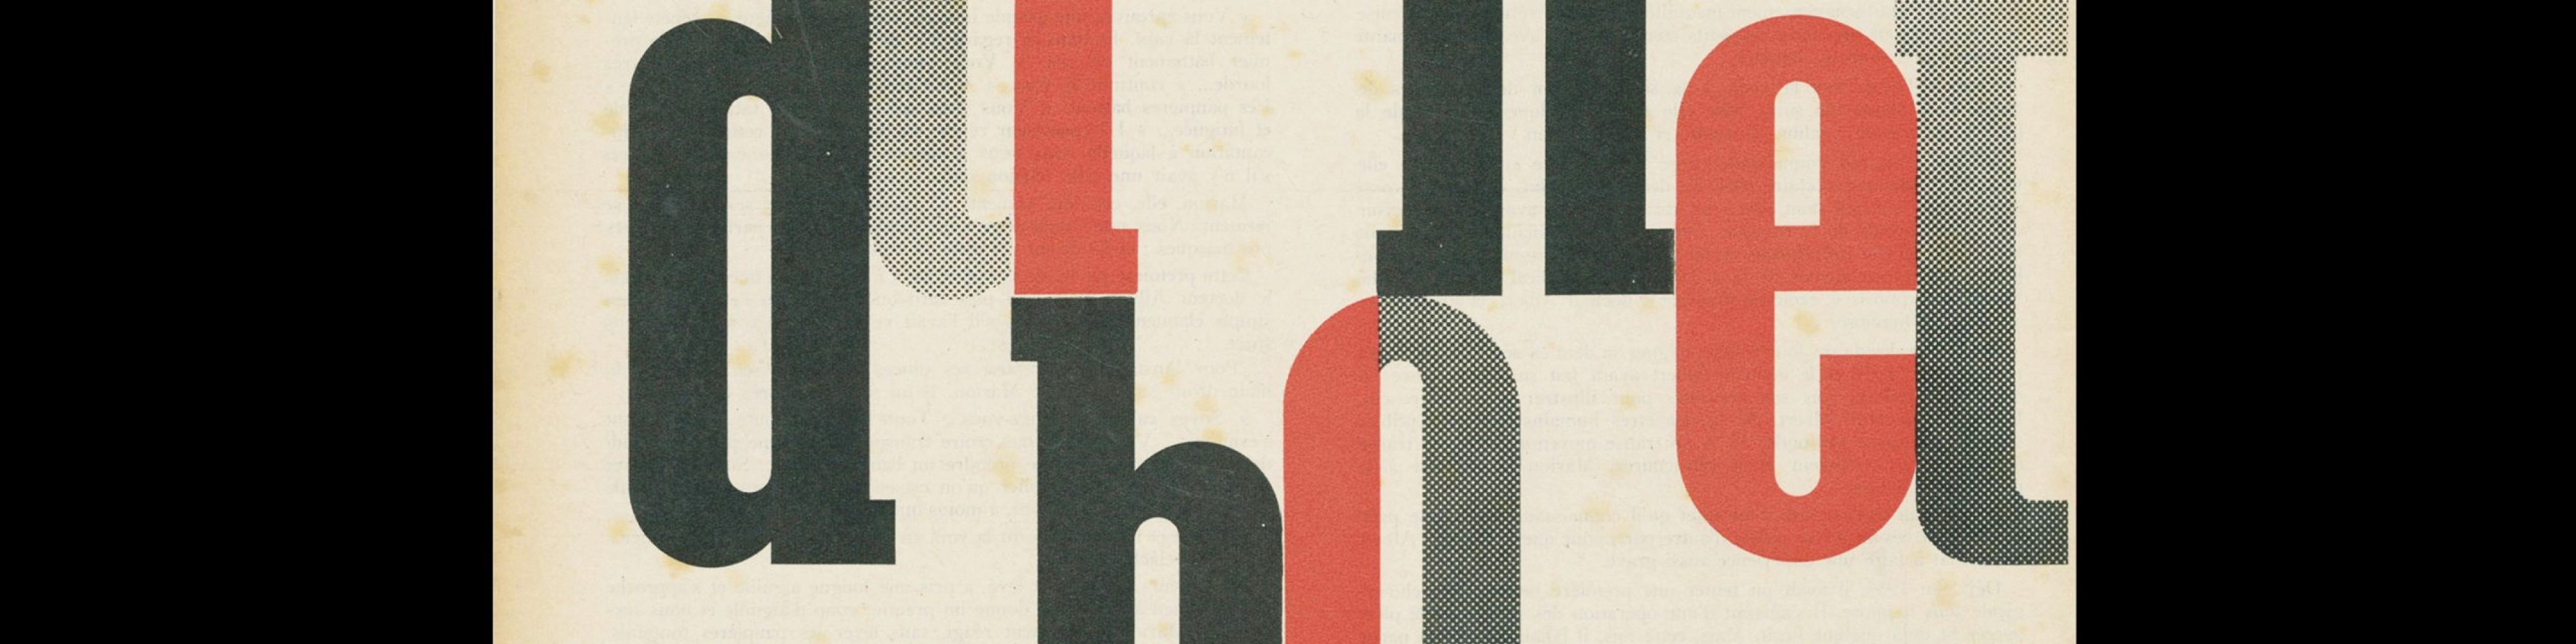 Dubonnet, Press Advertisement, 1956. Design by Salvi